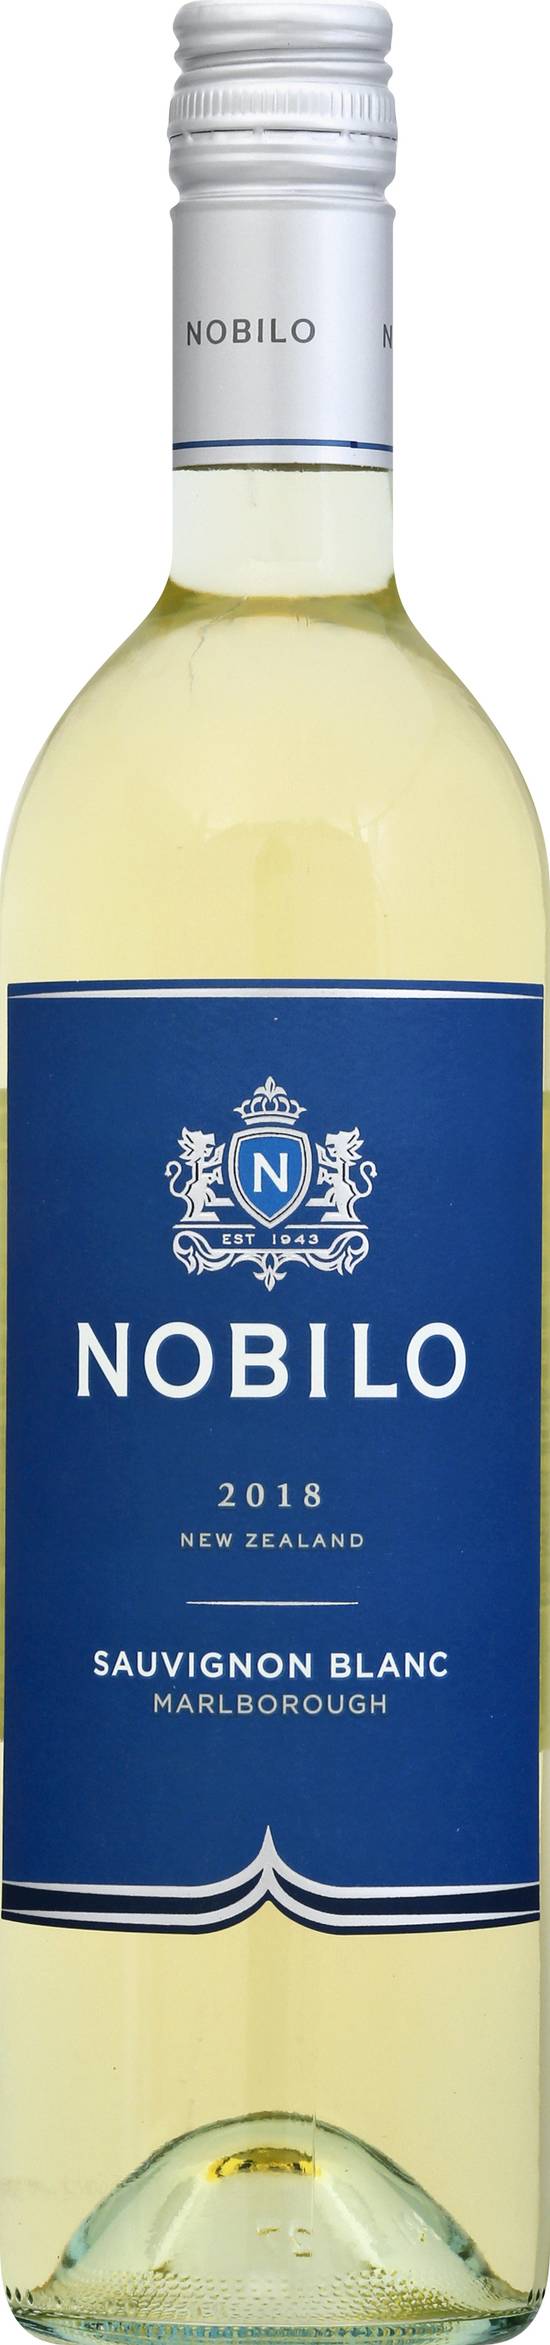 Nobilo Marlborough New Zealand Sauvignon Blanc Wine 2018 (750 ml)